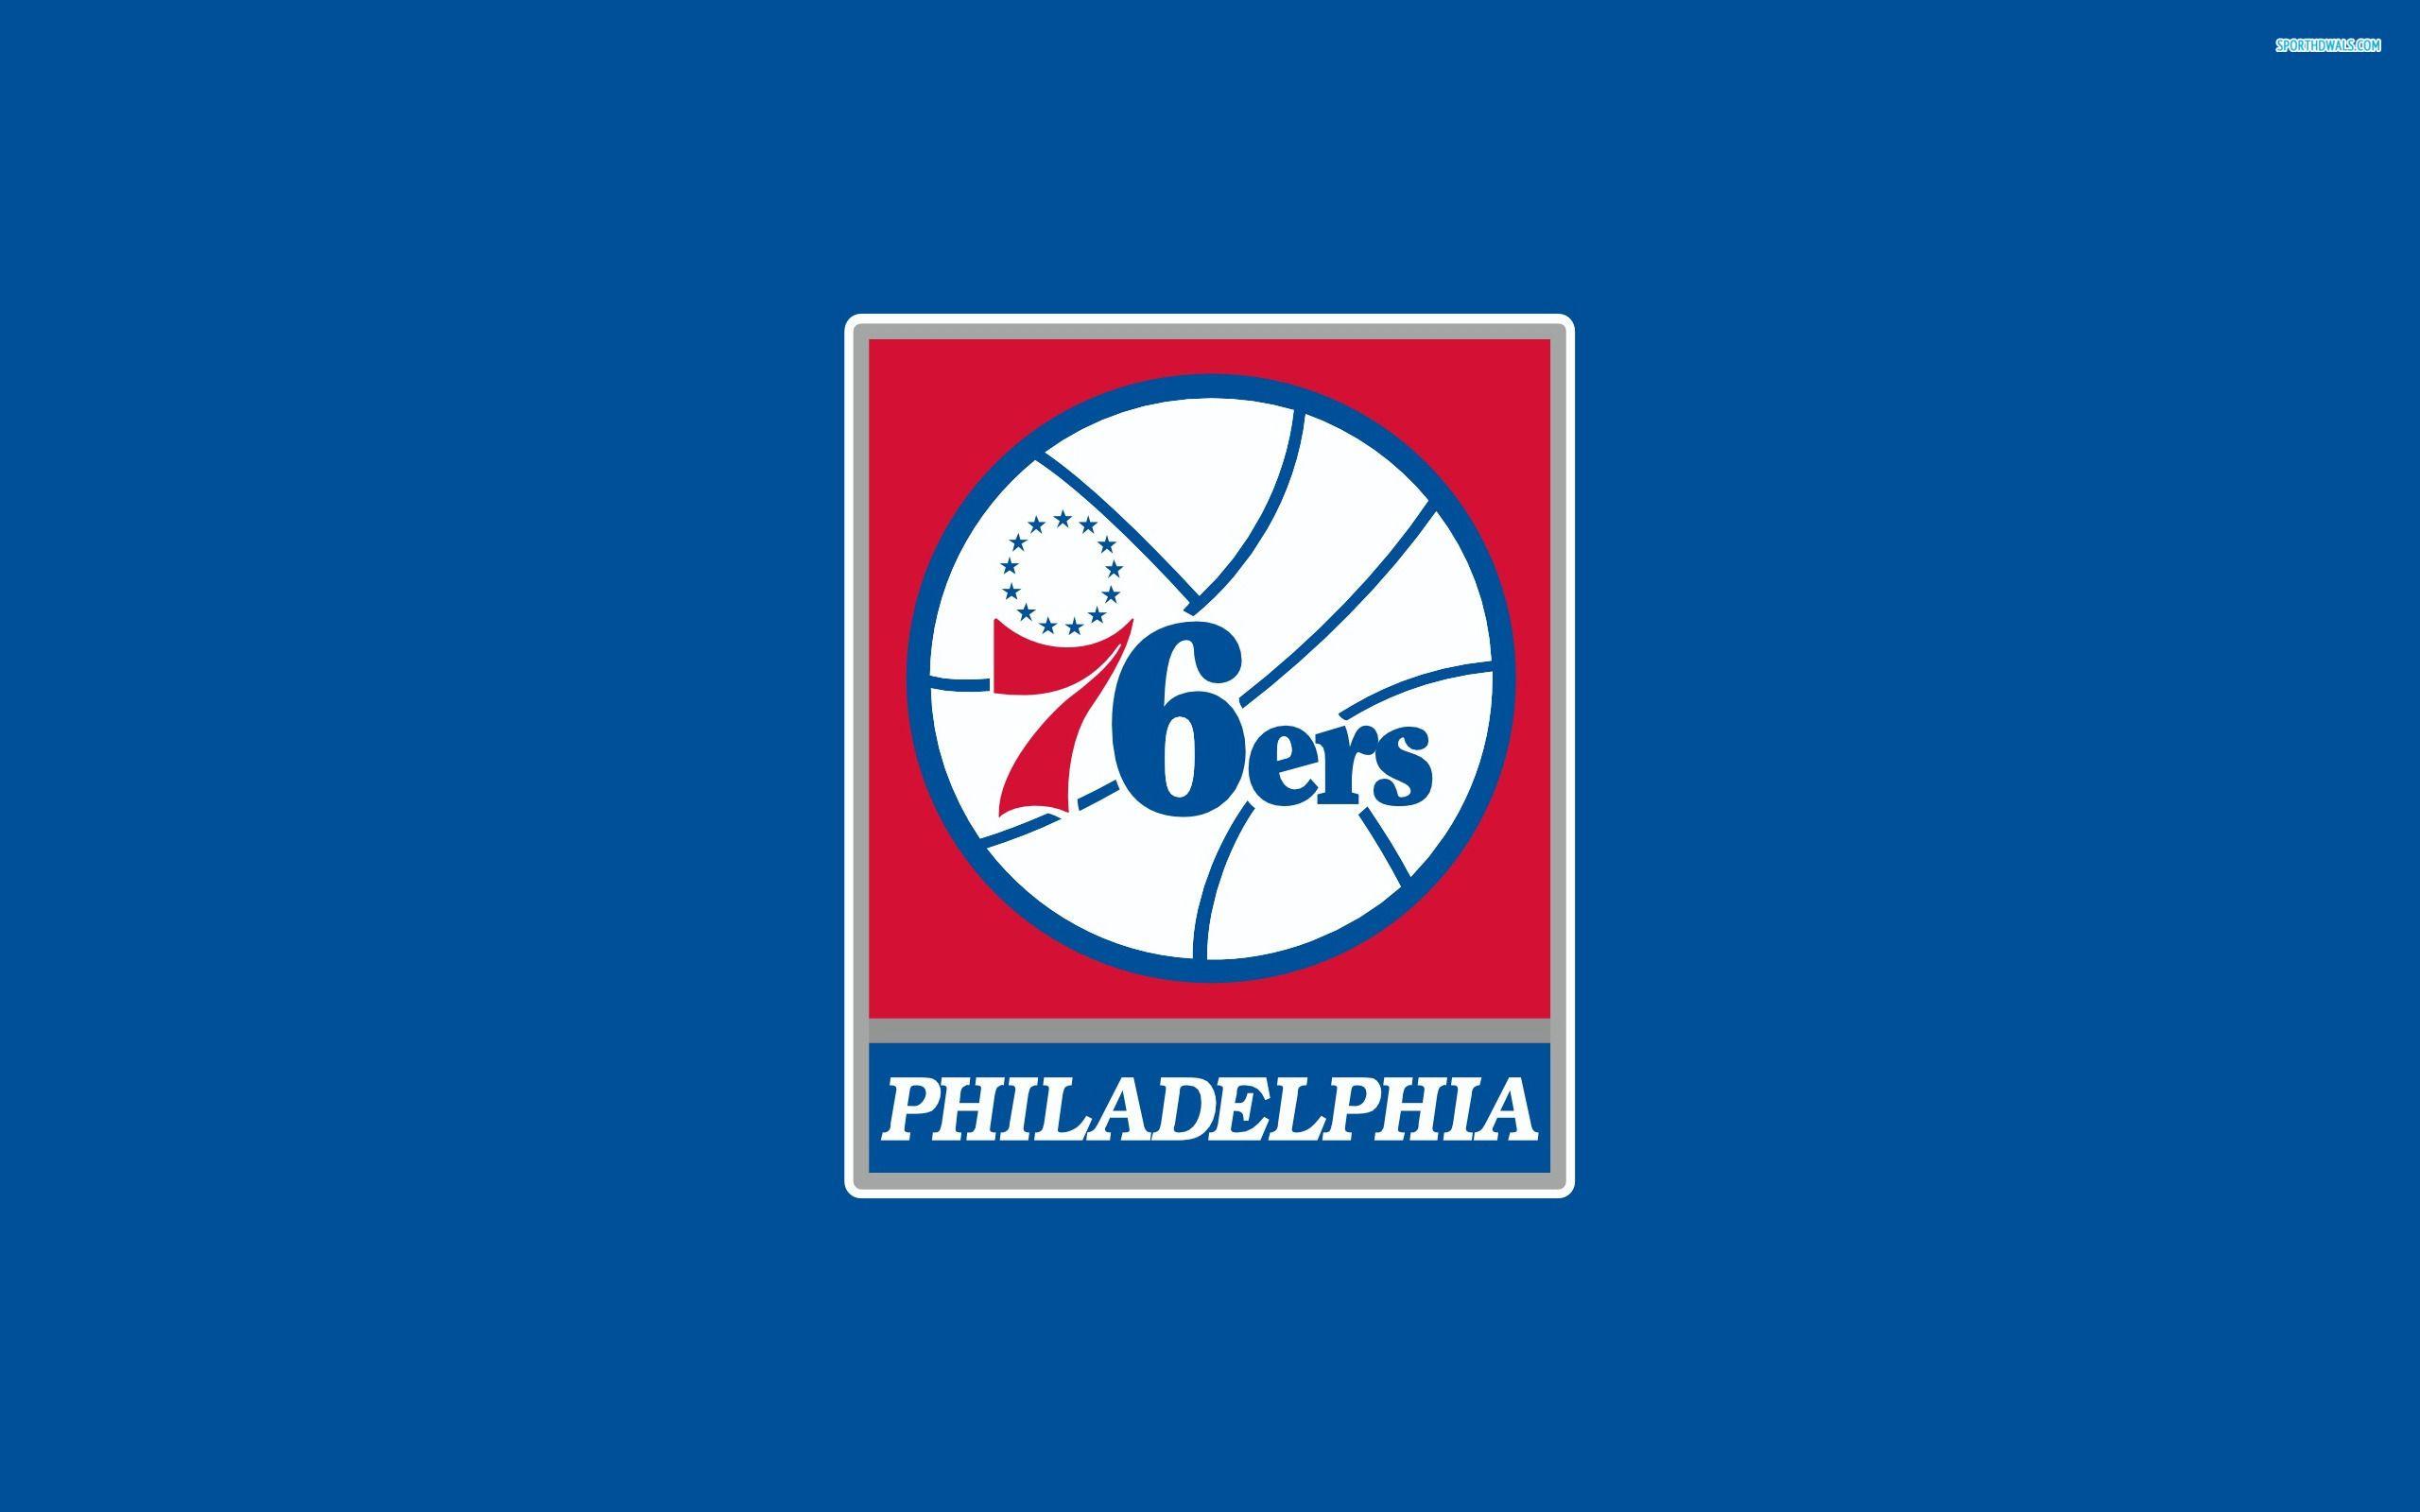 Outstanding Philadelphia 76ers wallpapers